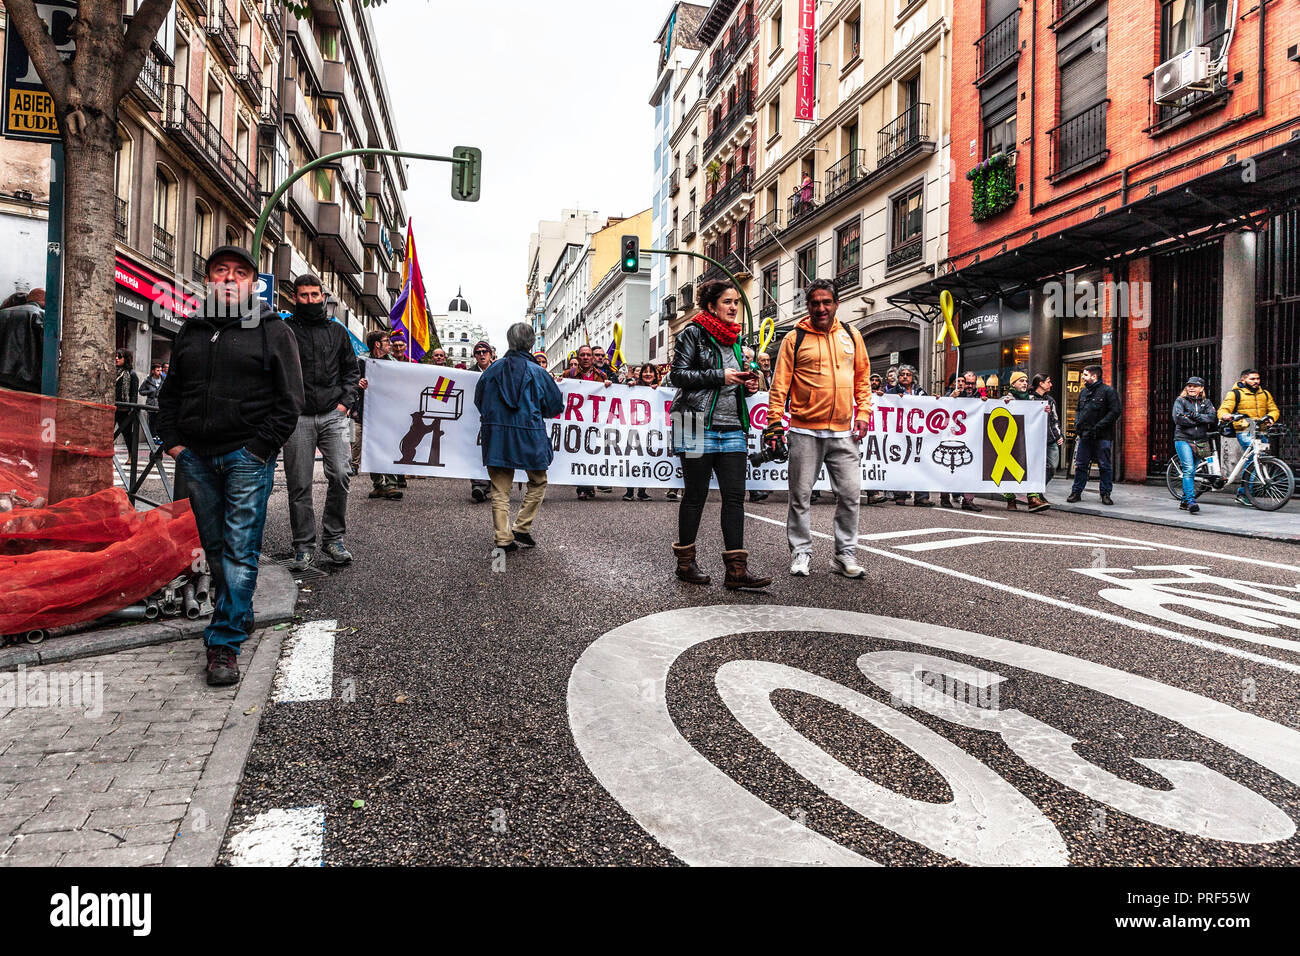 Multitudinaria manifestación exigiendo libertad para presos políticos, Gran Vía, Madrid, España. Stock Photo